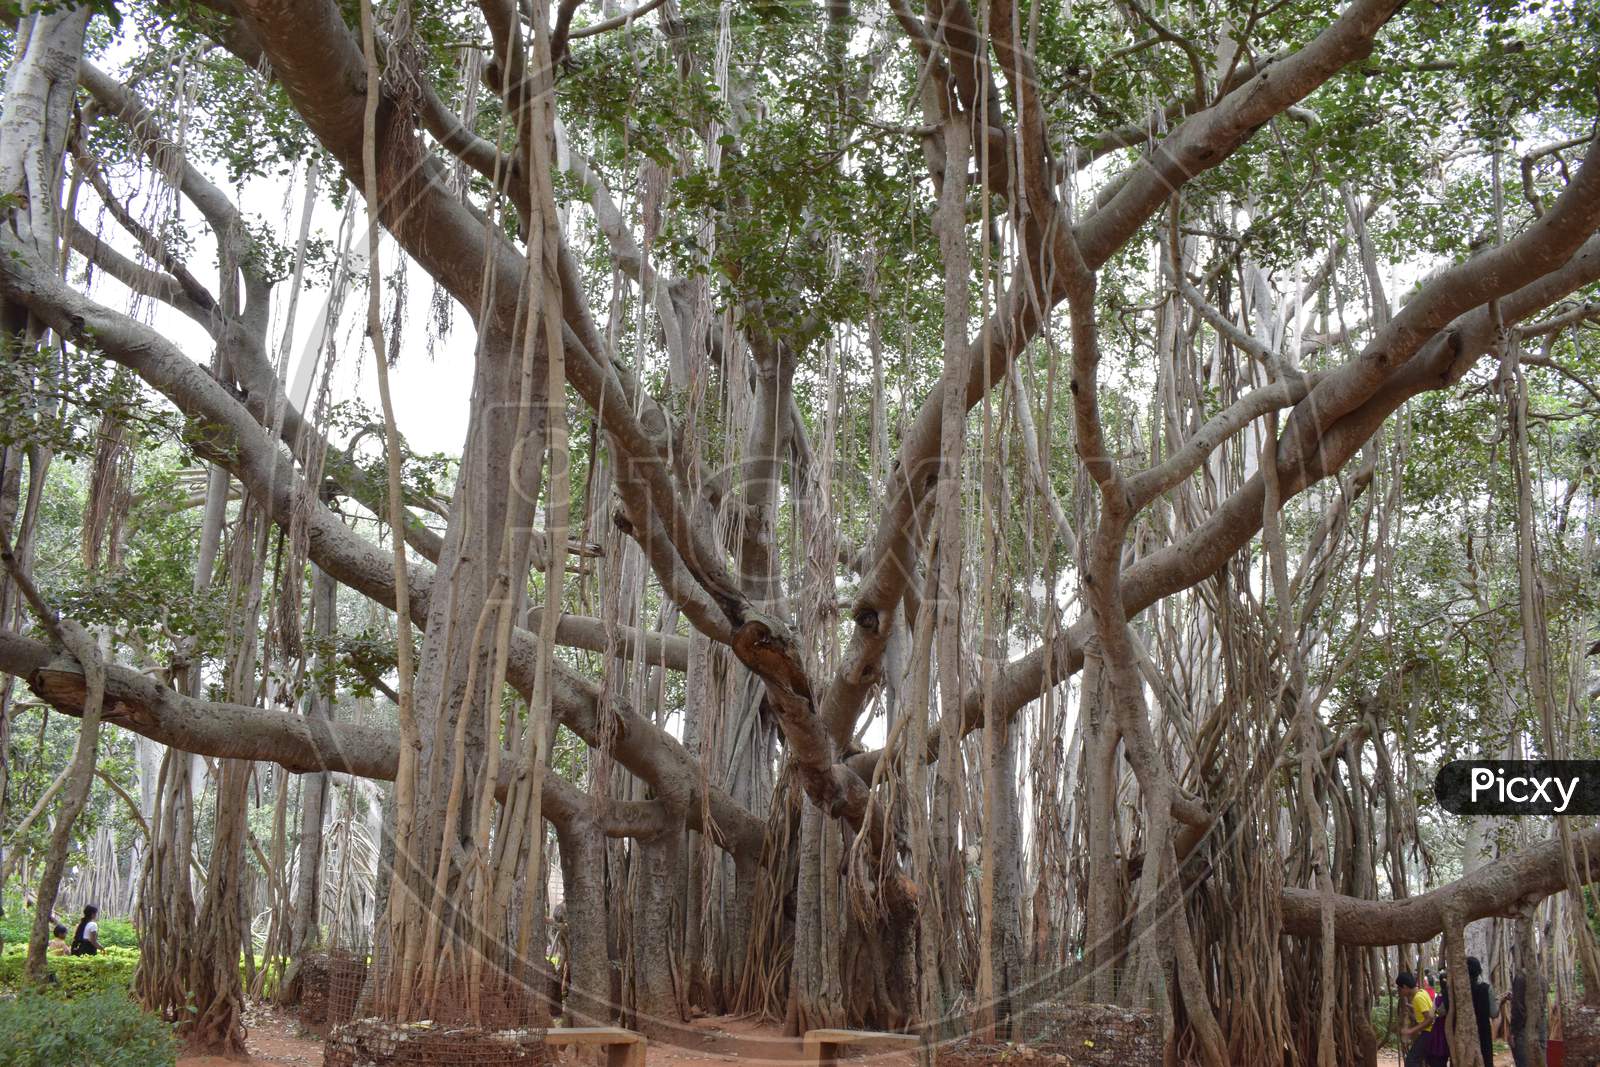 A large Big banyan tree structure